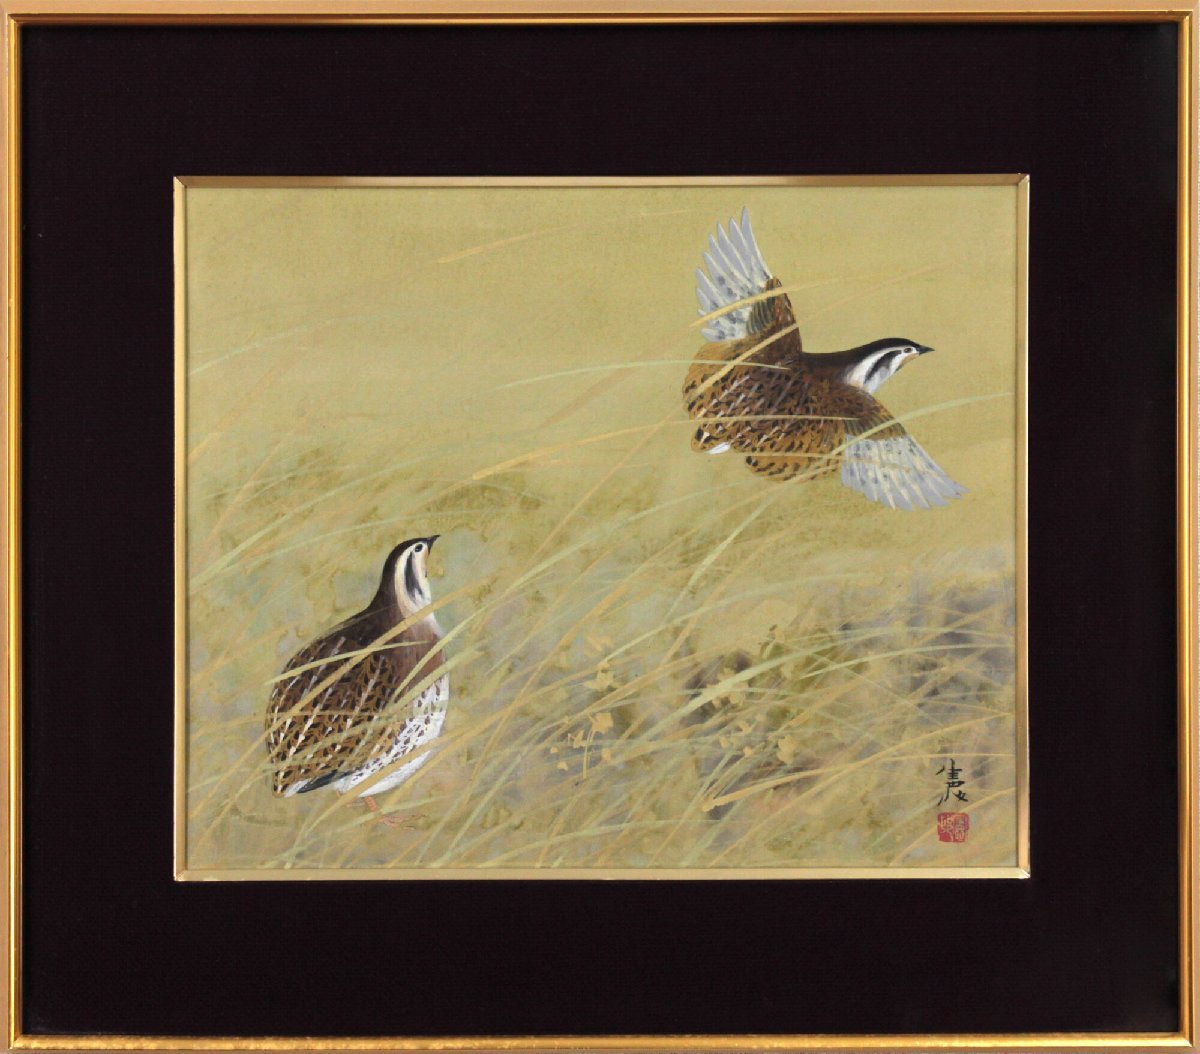 Norikuni Kawamura Caille Peinture japonaise [Authentique garanti] Peinture - Hokkaido Gallery, Peinture, Peinture japonaise, Fleurs et oiseaux, Faune